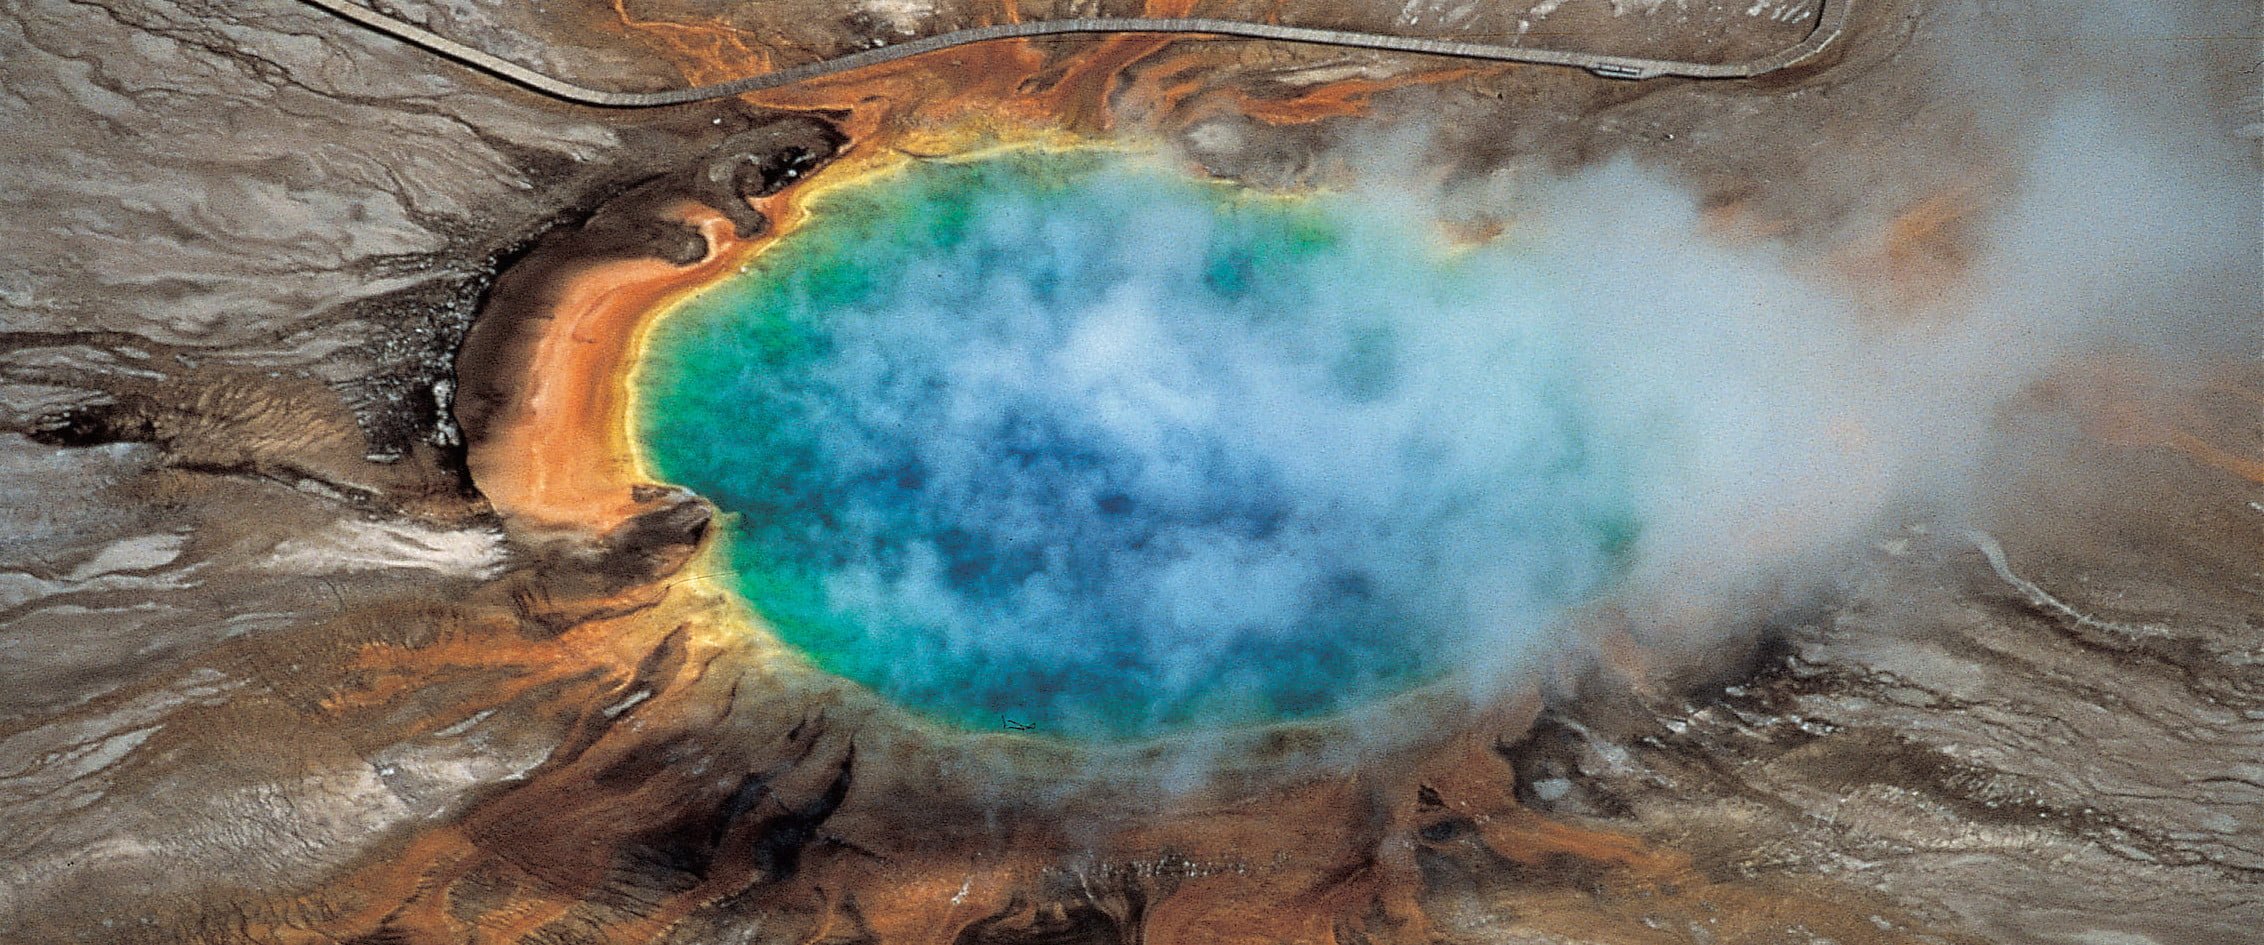 El Supervolcan De Yellowstone Alberga Otra Reserva De Magma Aun Mas Grande E1431987266602 مجلة نقطة العلمية